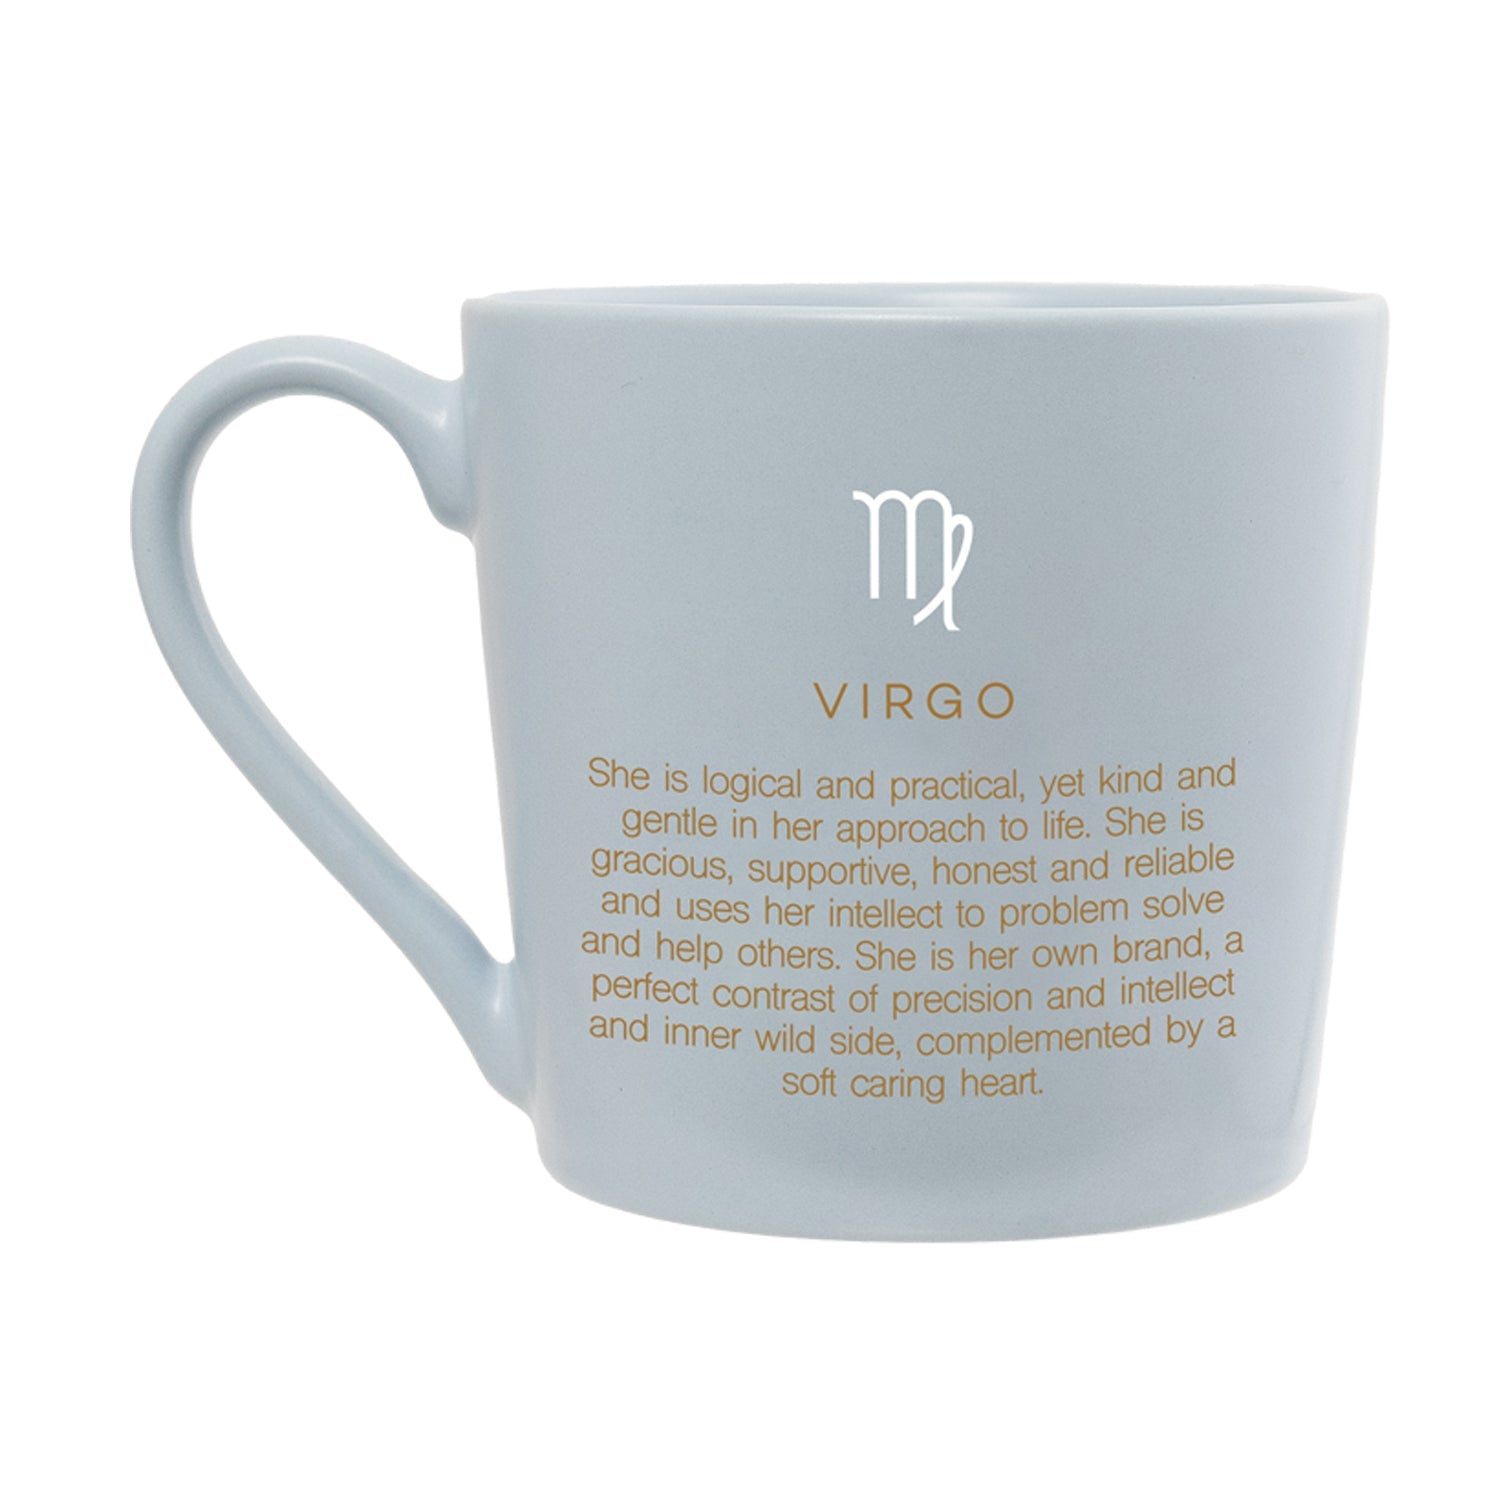 Splosh - Mystique Mug - Virgo